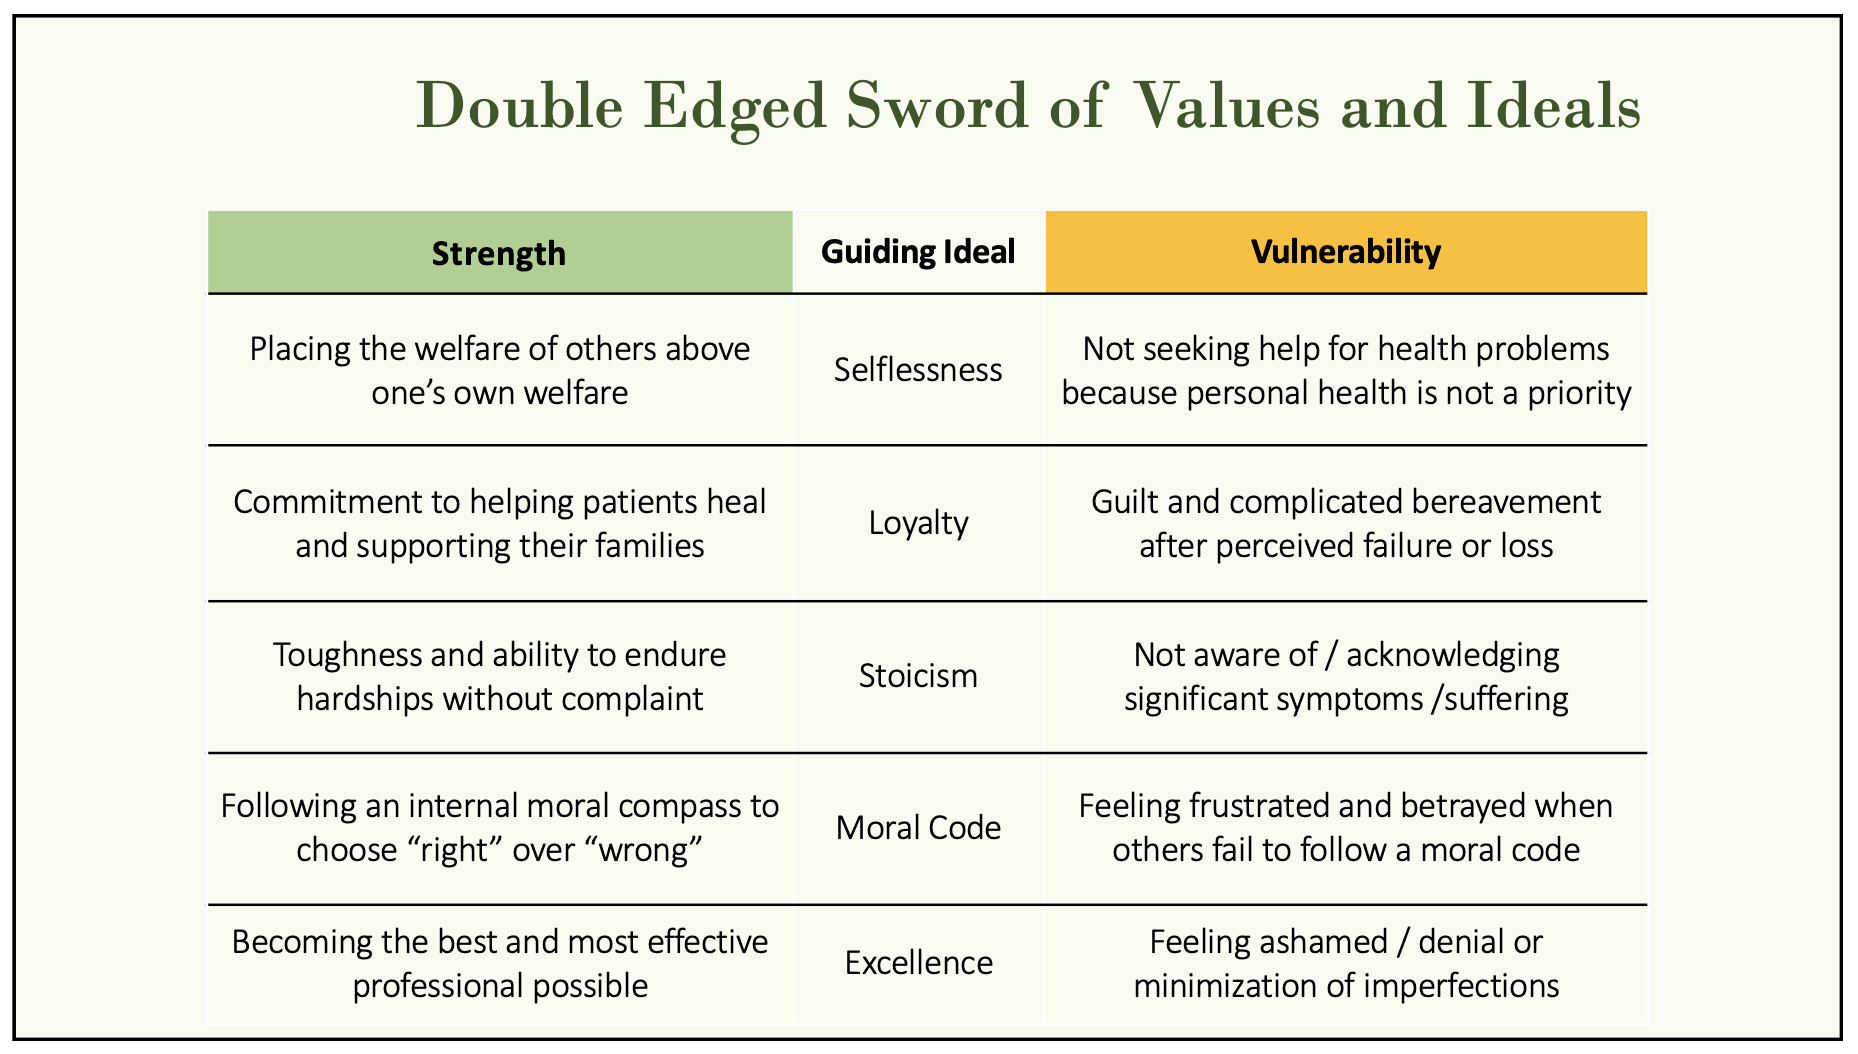 Double-edged sword values & ideals